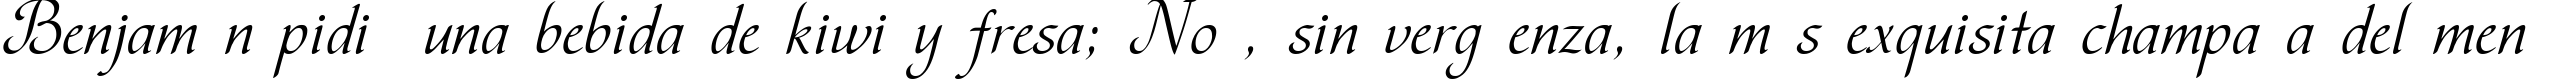 Пример написания шрифтом Vesna текста на испанском